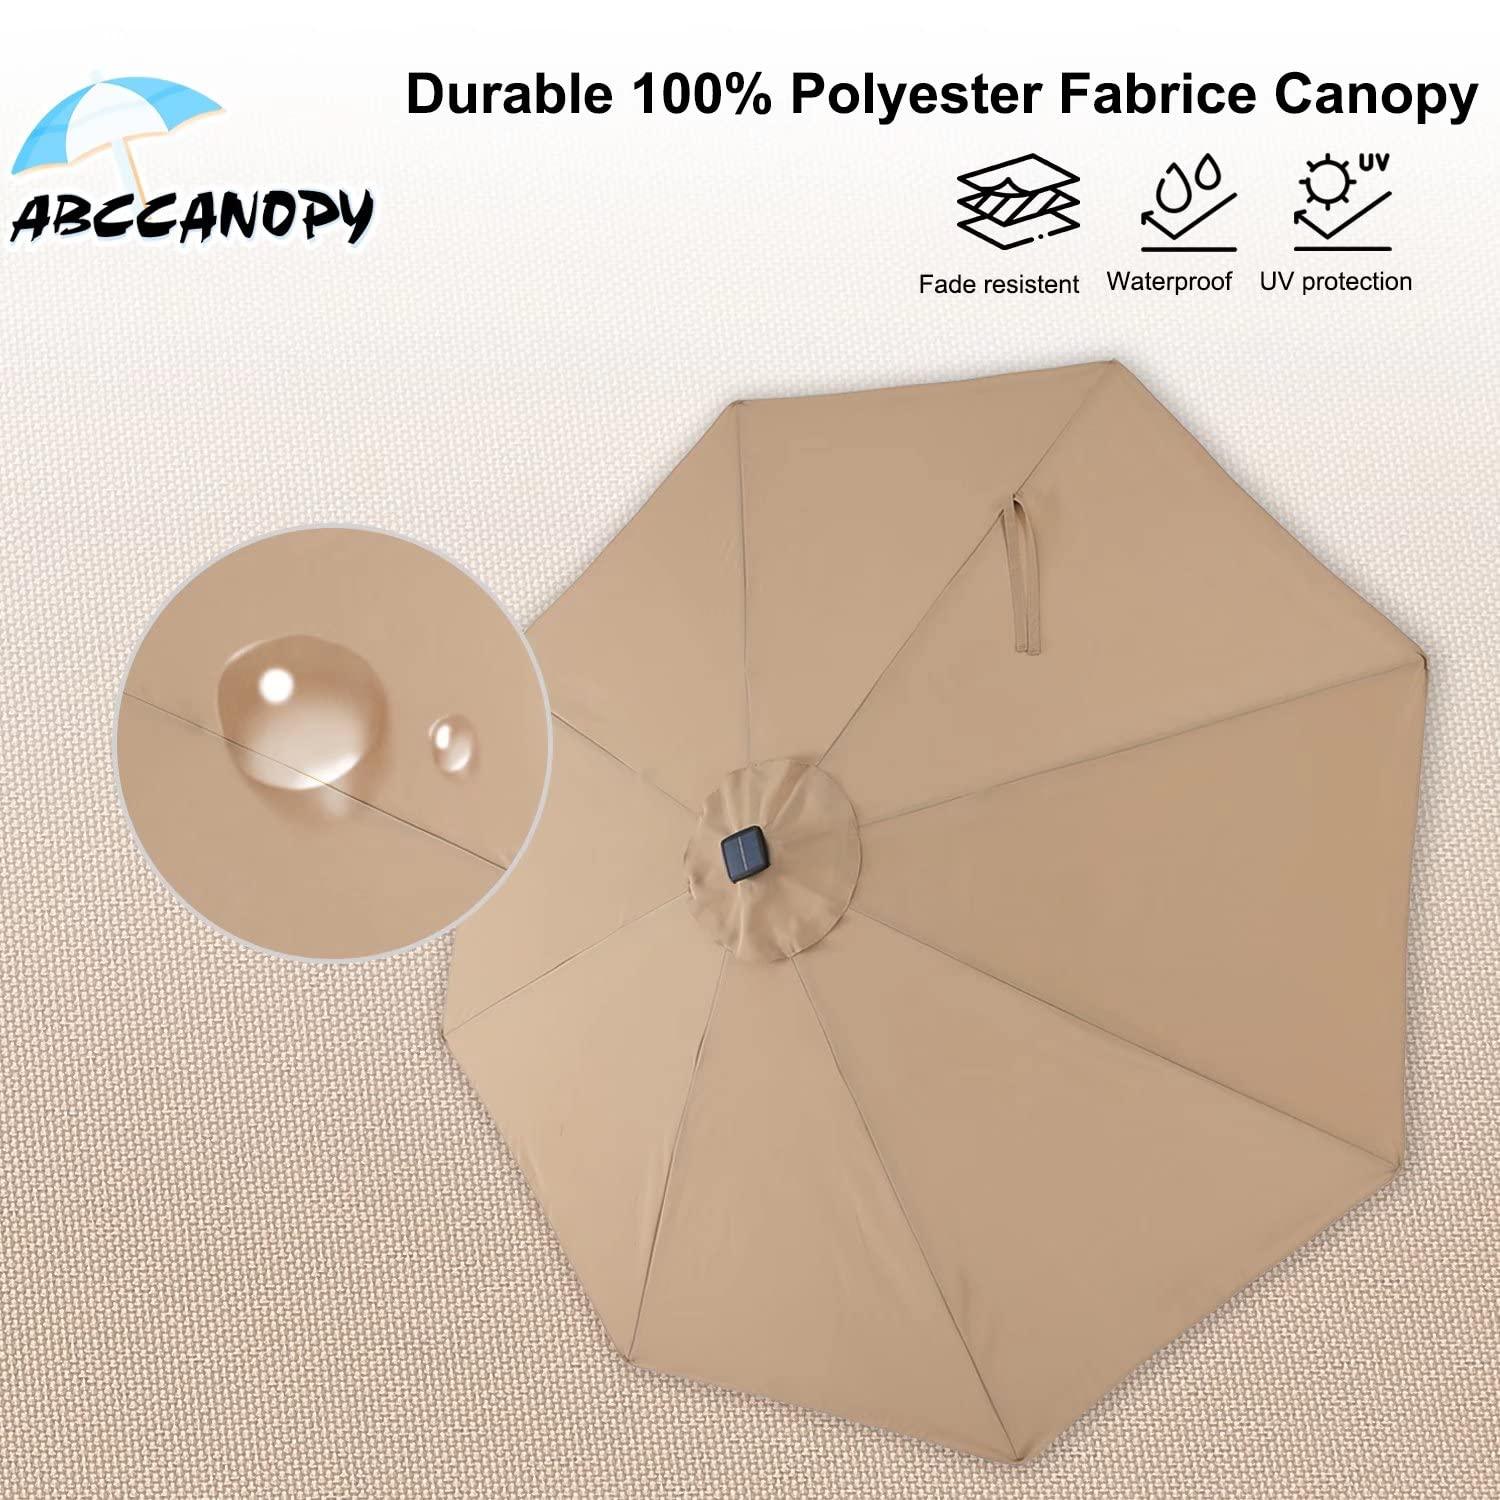 ABCCANOPY Durable Solar Led Patio Umbrellas with 32LED Lights 9FT (khaki) - CookCave